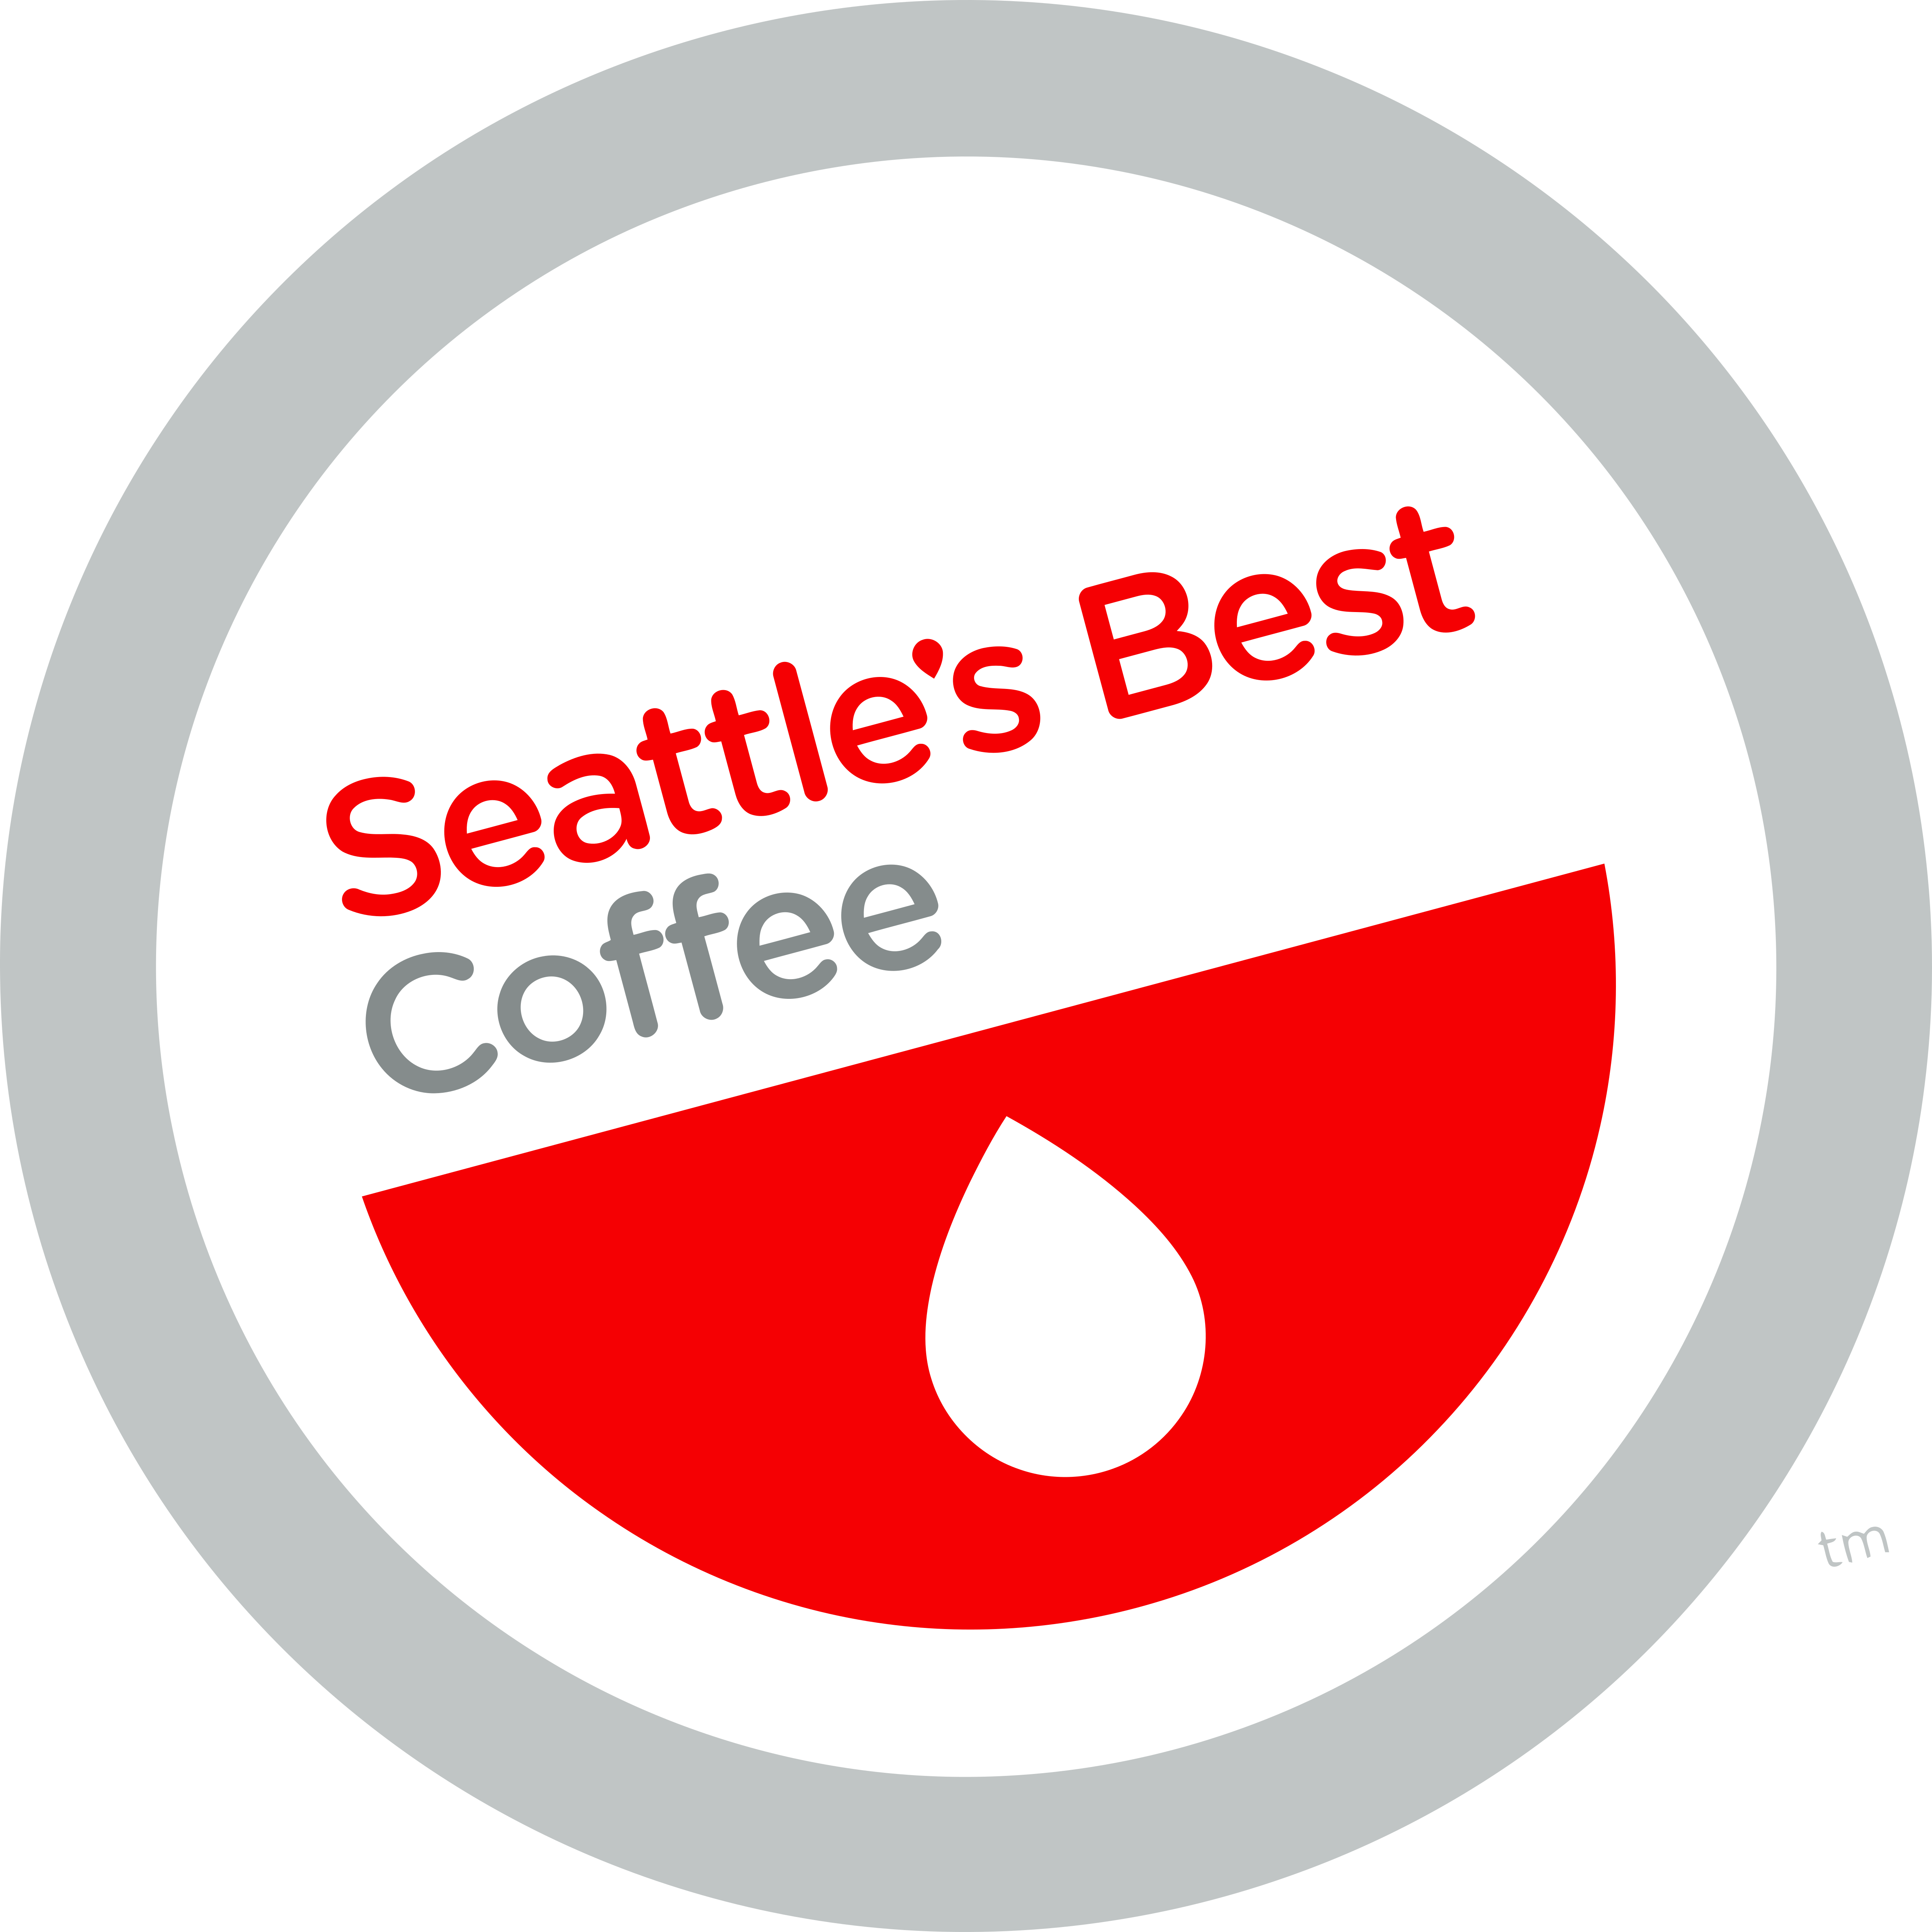 Seattle’s Best Coffee Logos Download